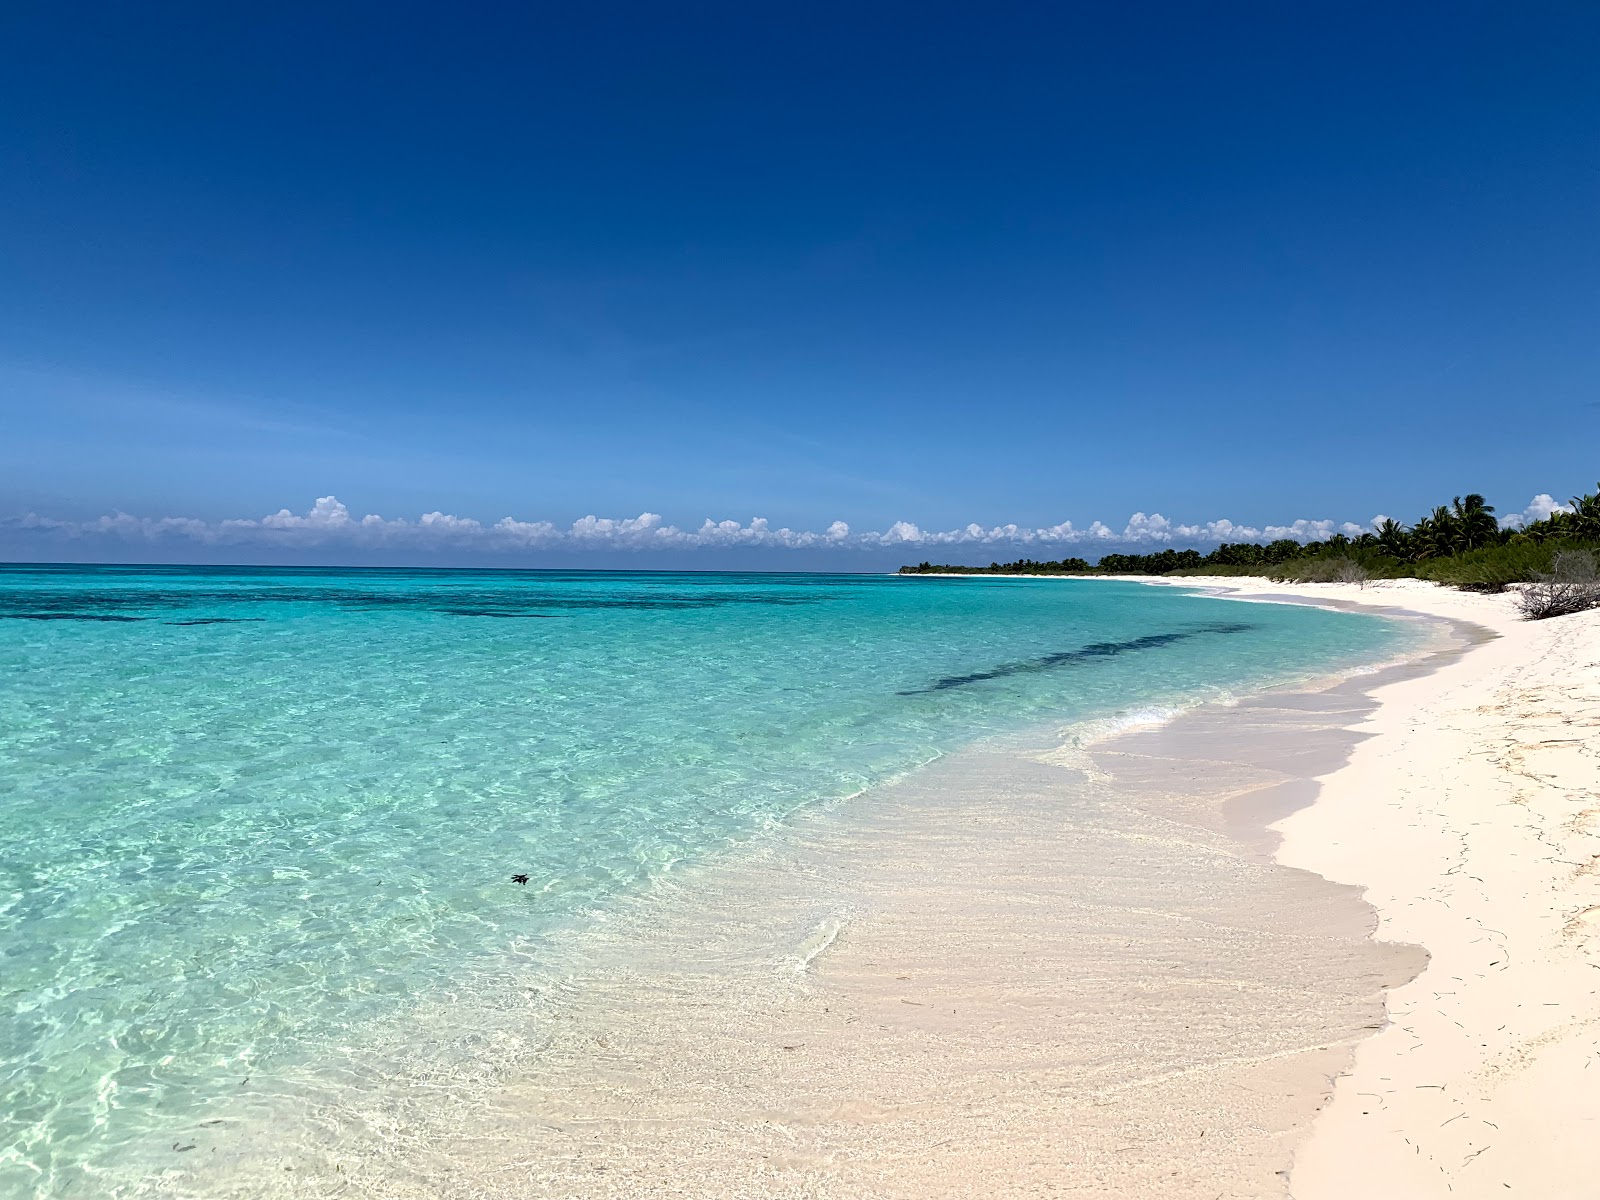 Foto di Playa "El Cielo" con una superficie del sabbia fine e luminosa